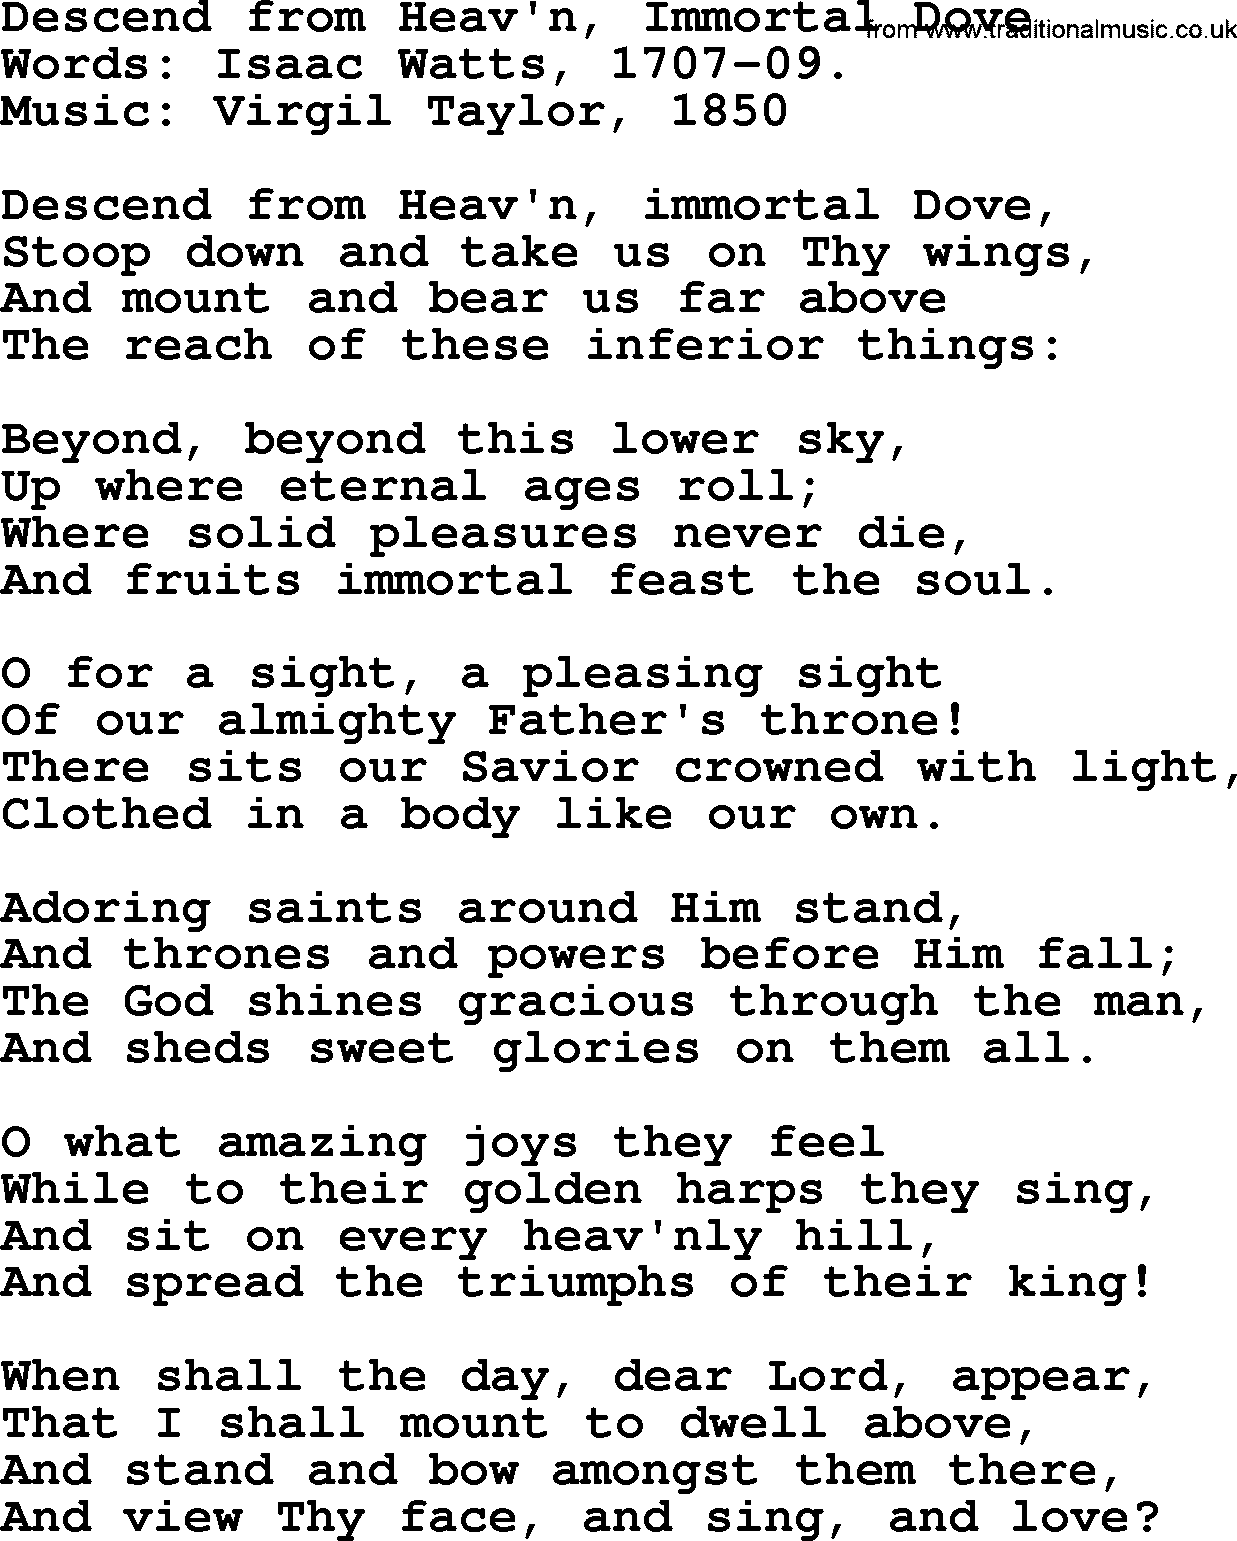 Isaac Watts Christian hymn: Descend from Heav'n, Immortal Dove- lyricss